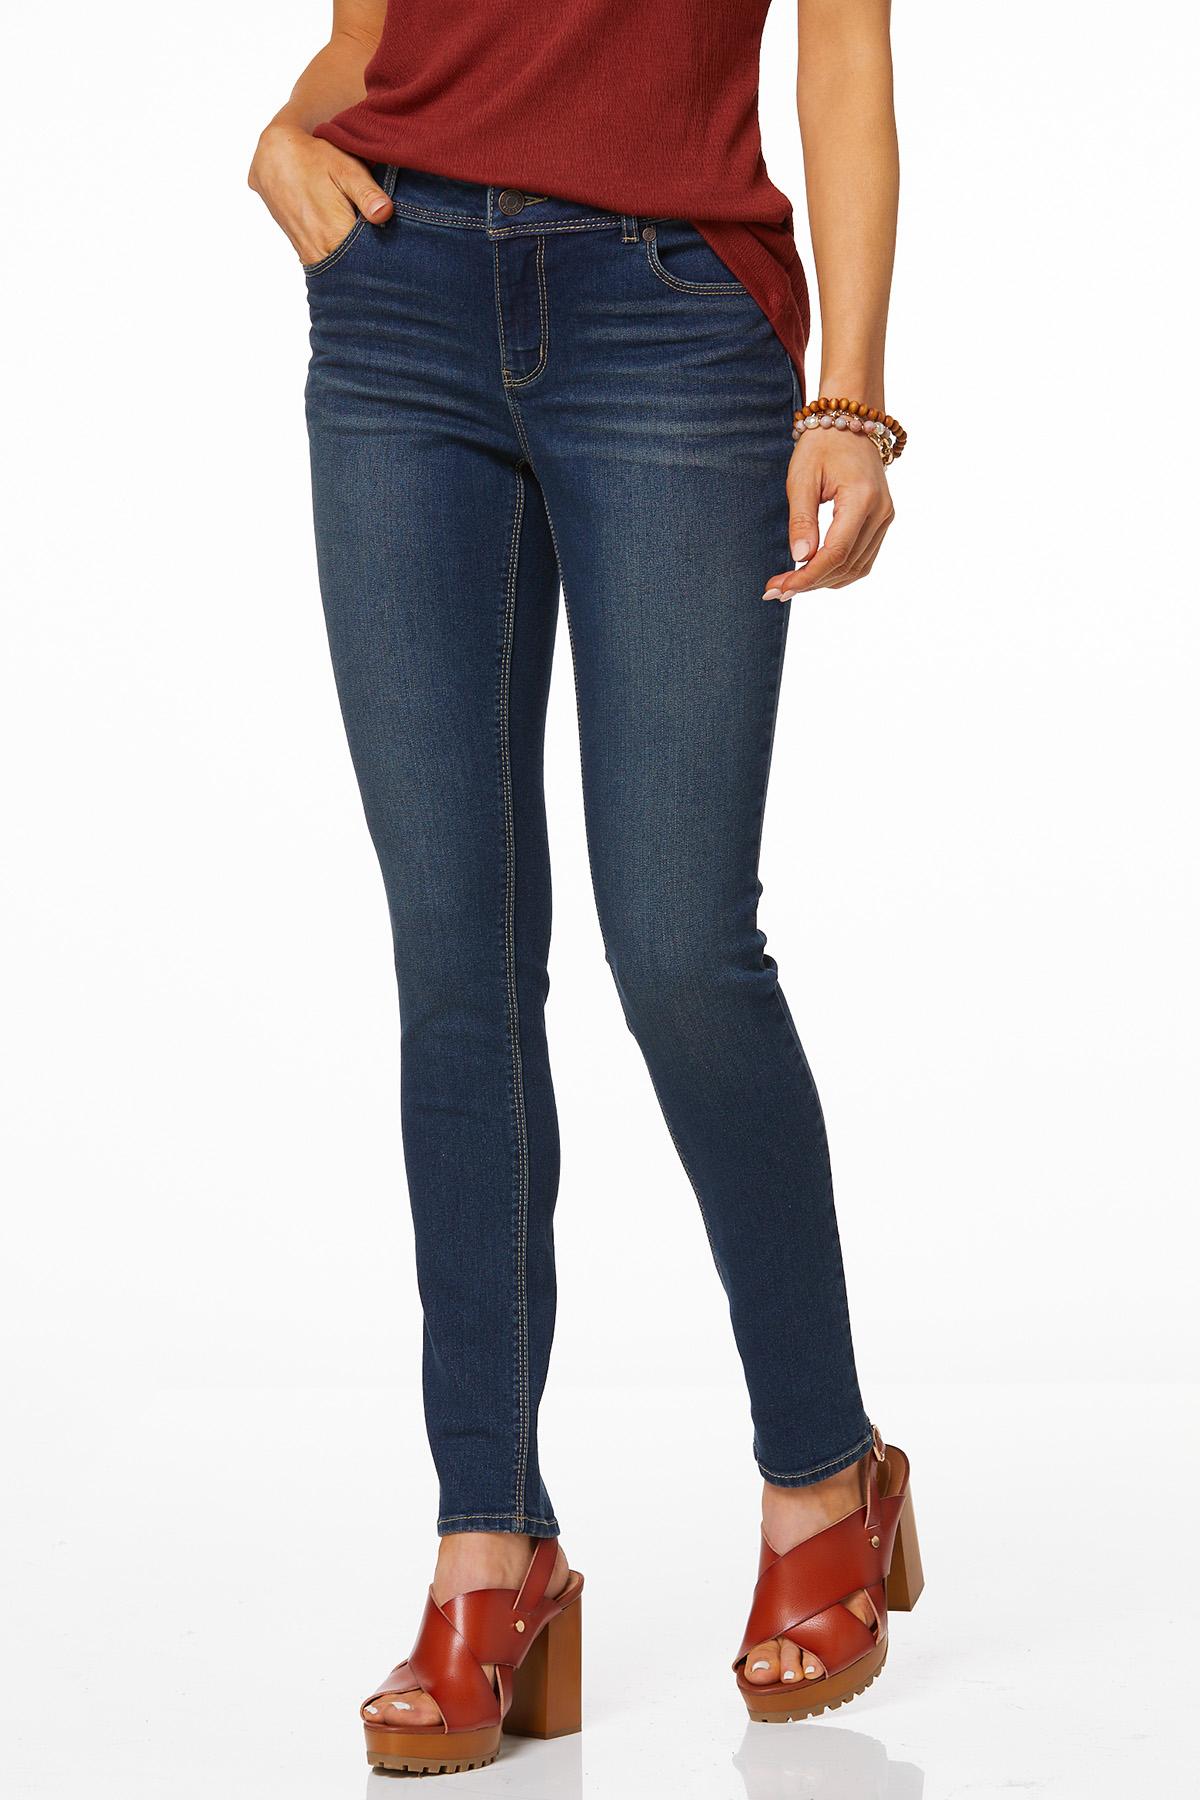 Cato Fashions | Cato Mid Rise Skinny Jeans